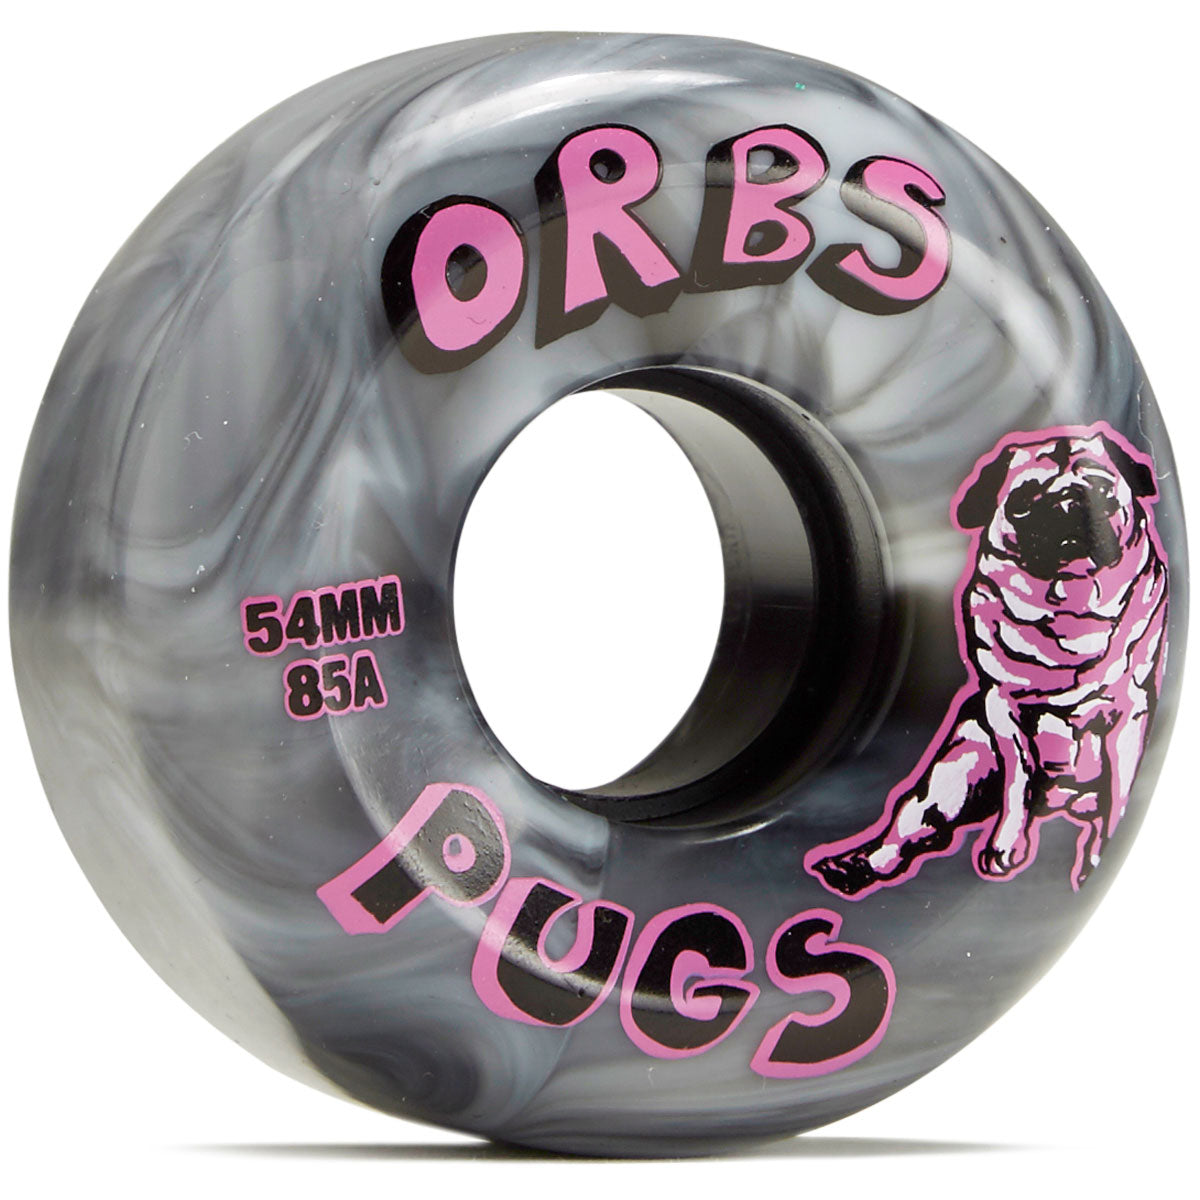 Welcome Orbs Pugs Conical 85A Skateboard Wheels - Black/White Swirl - 54mm image 1